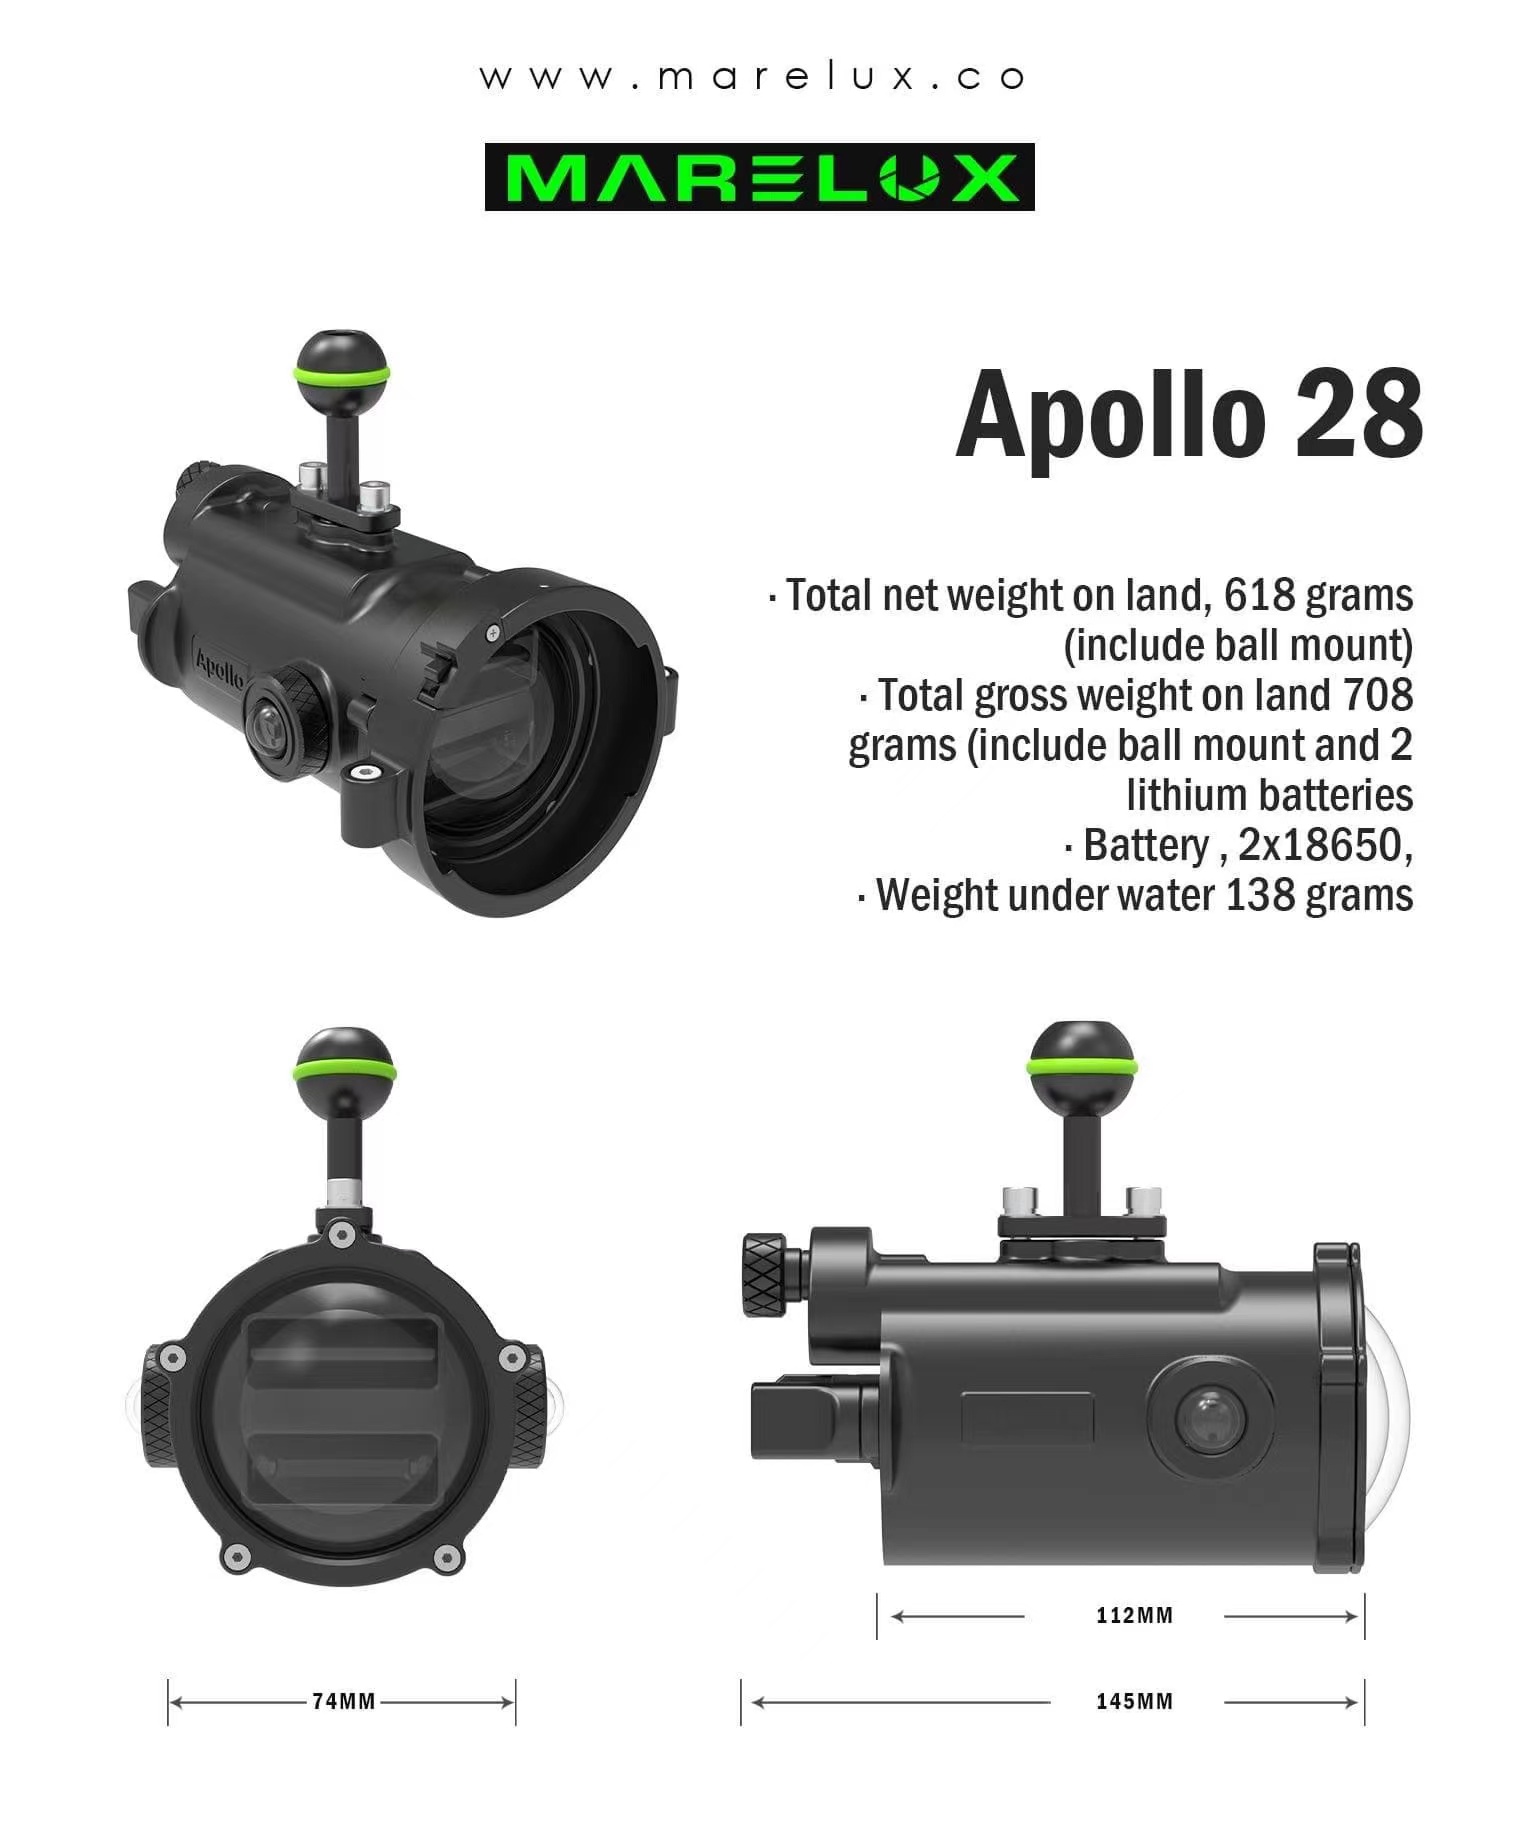 Marelux Announced New Product - Apollo 28 Strobe